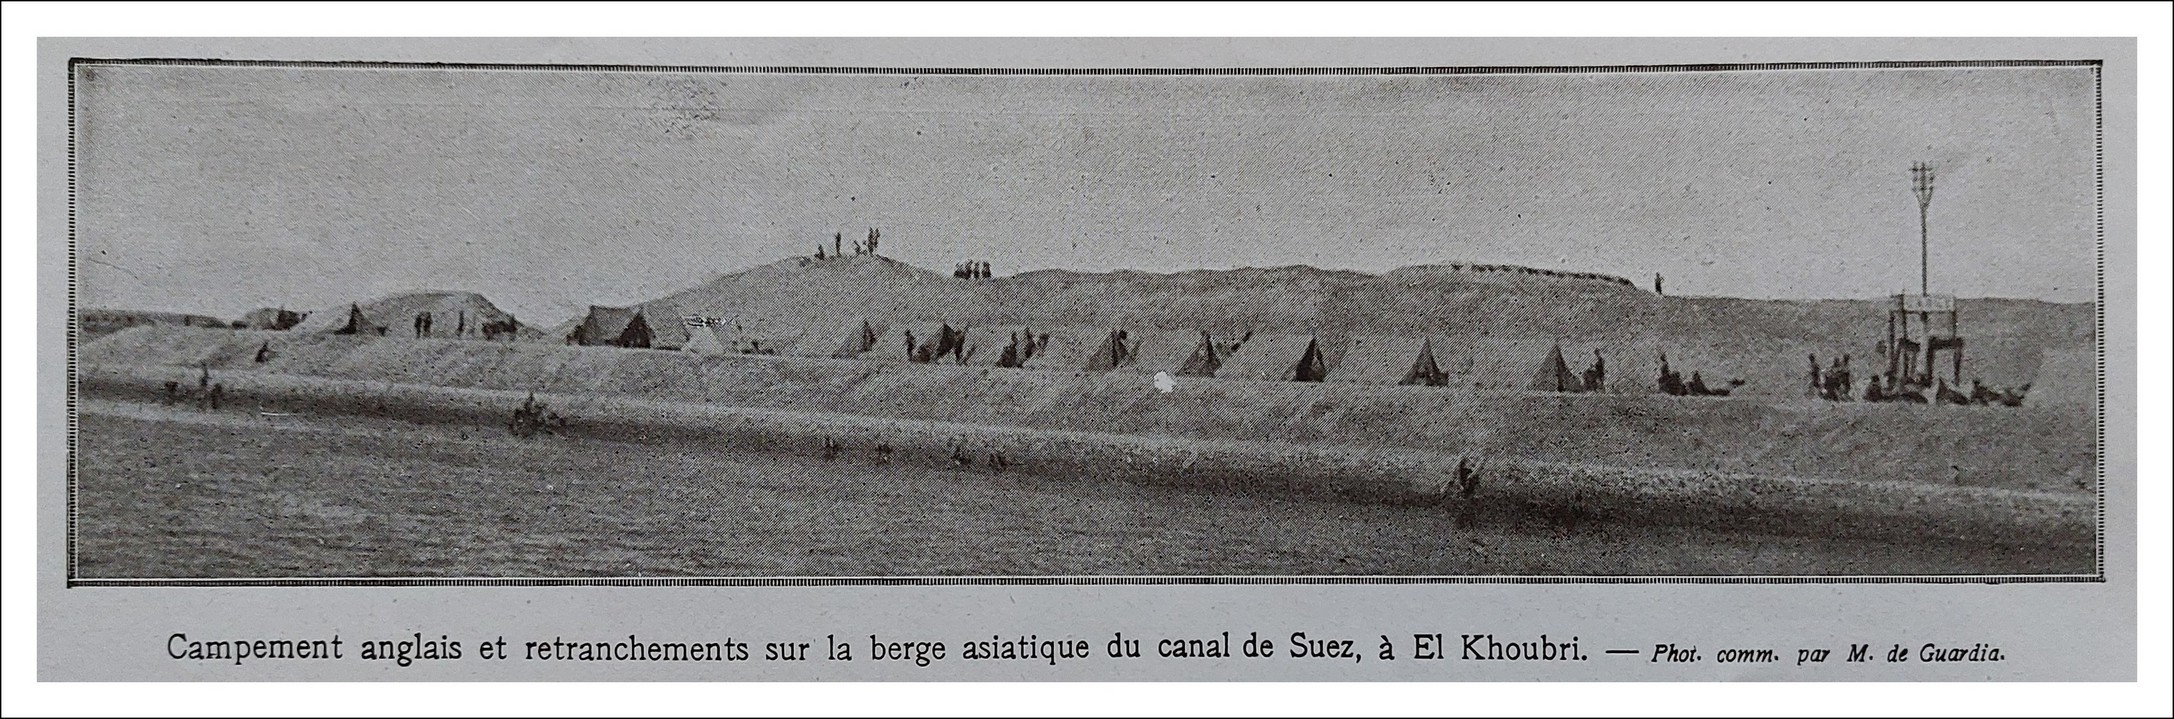 Canal de Suez LI 1914-12-05 A -.jpg